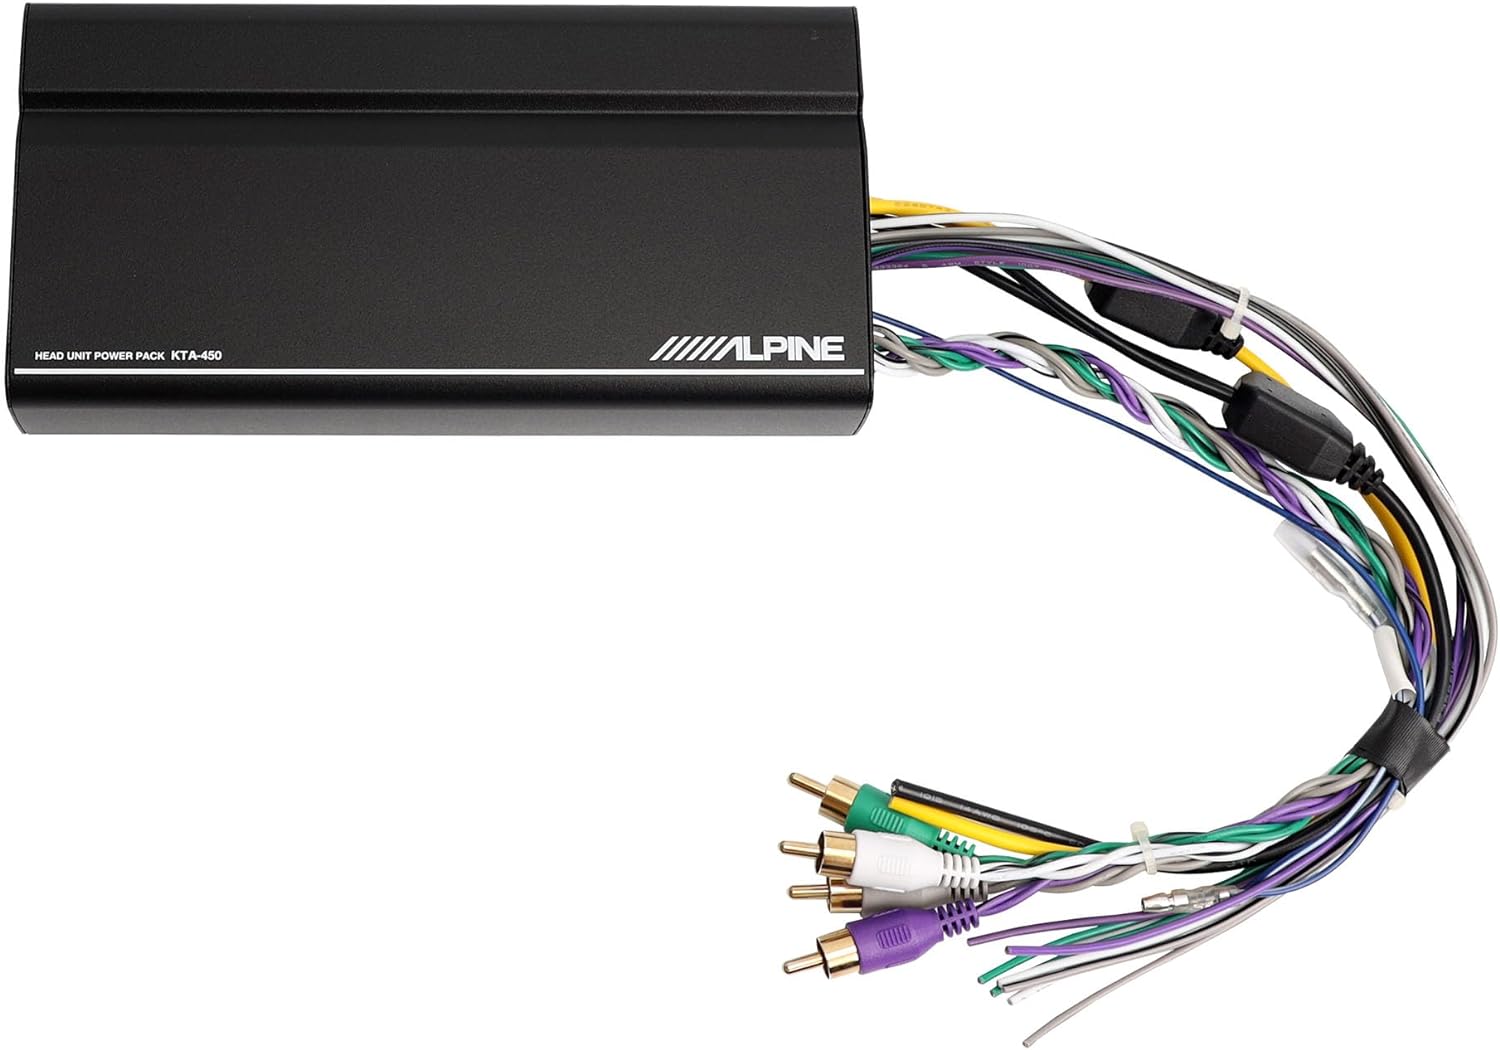 Alpine iLX-W670 2-DIN Car Stereo, KTA-450 PowerStack Amp + SiriusXM Tuner Bundle